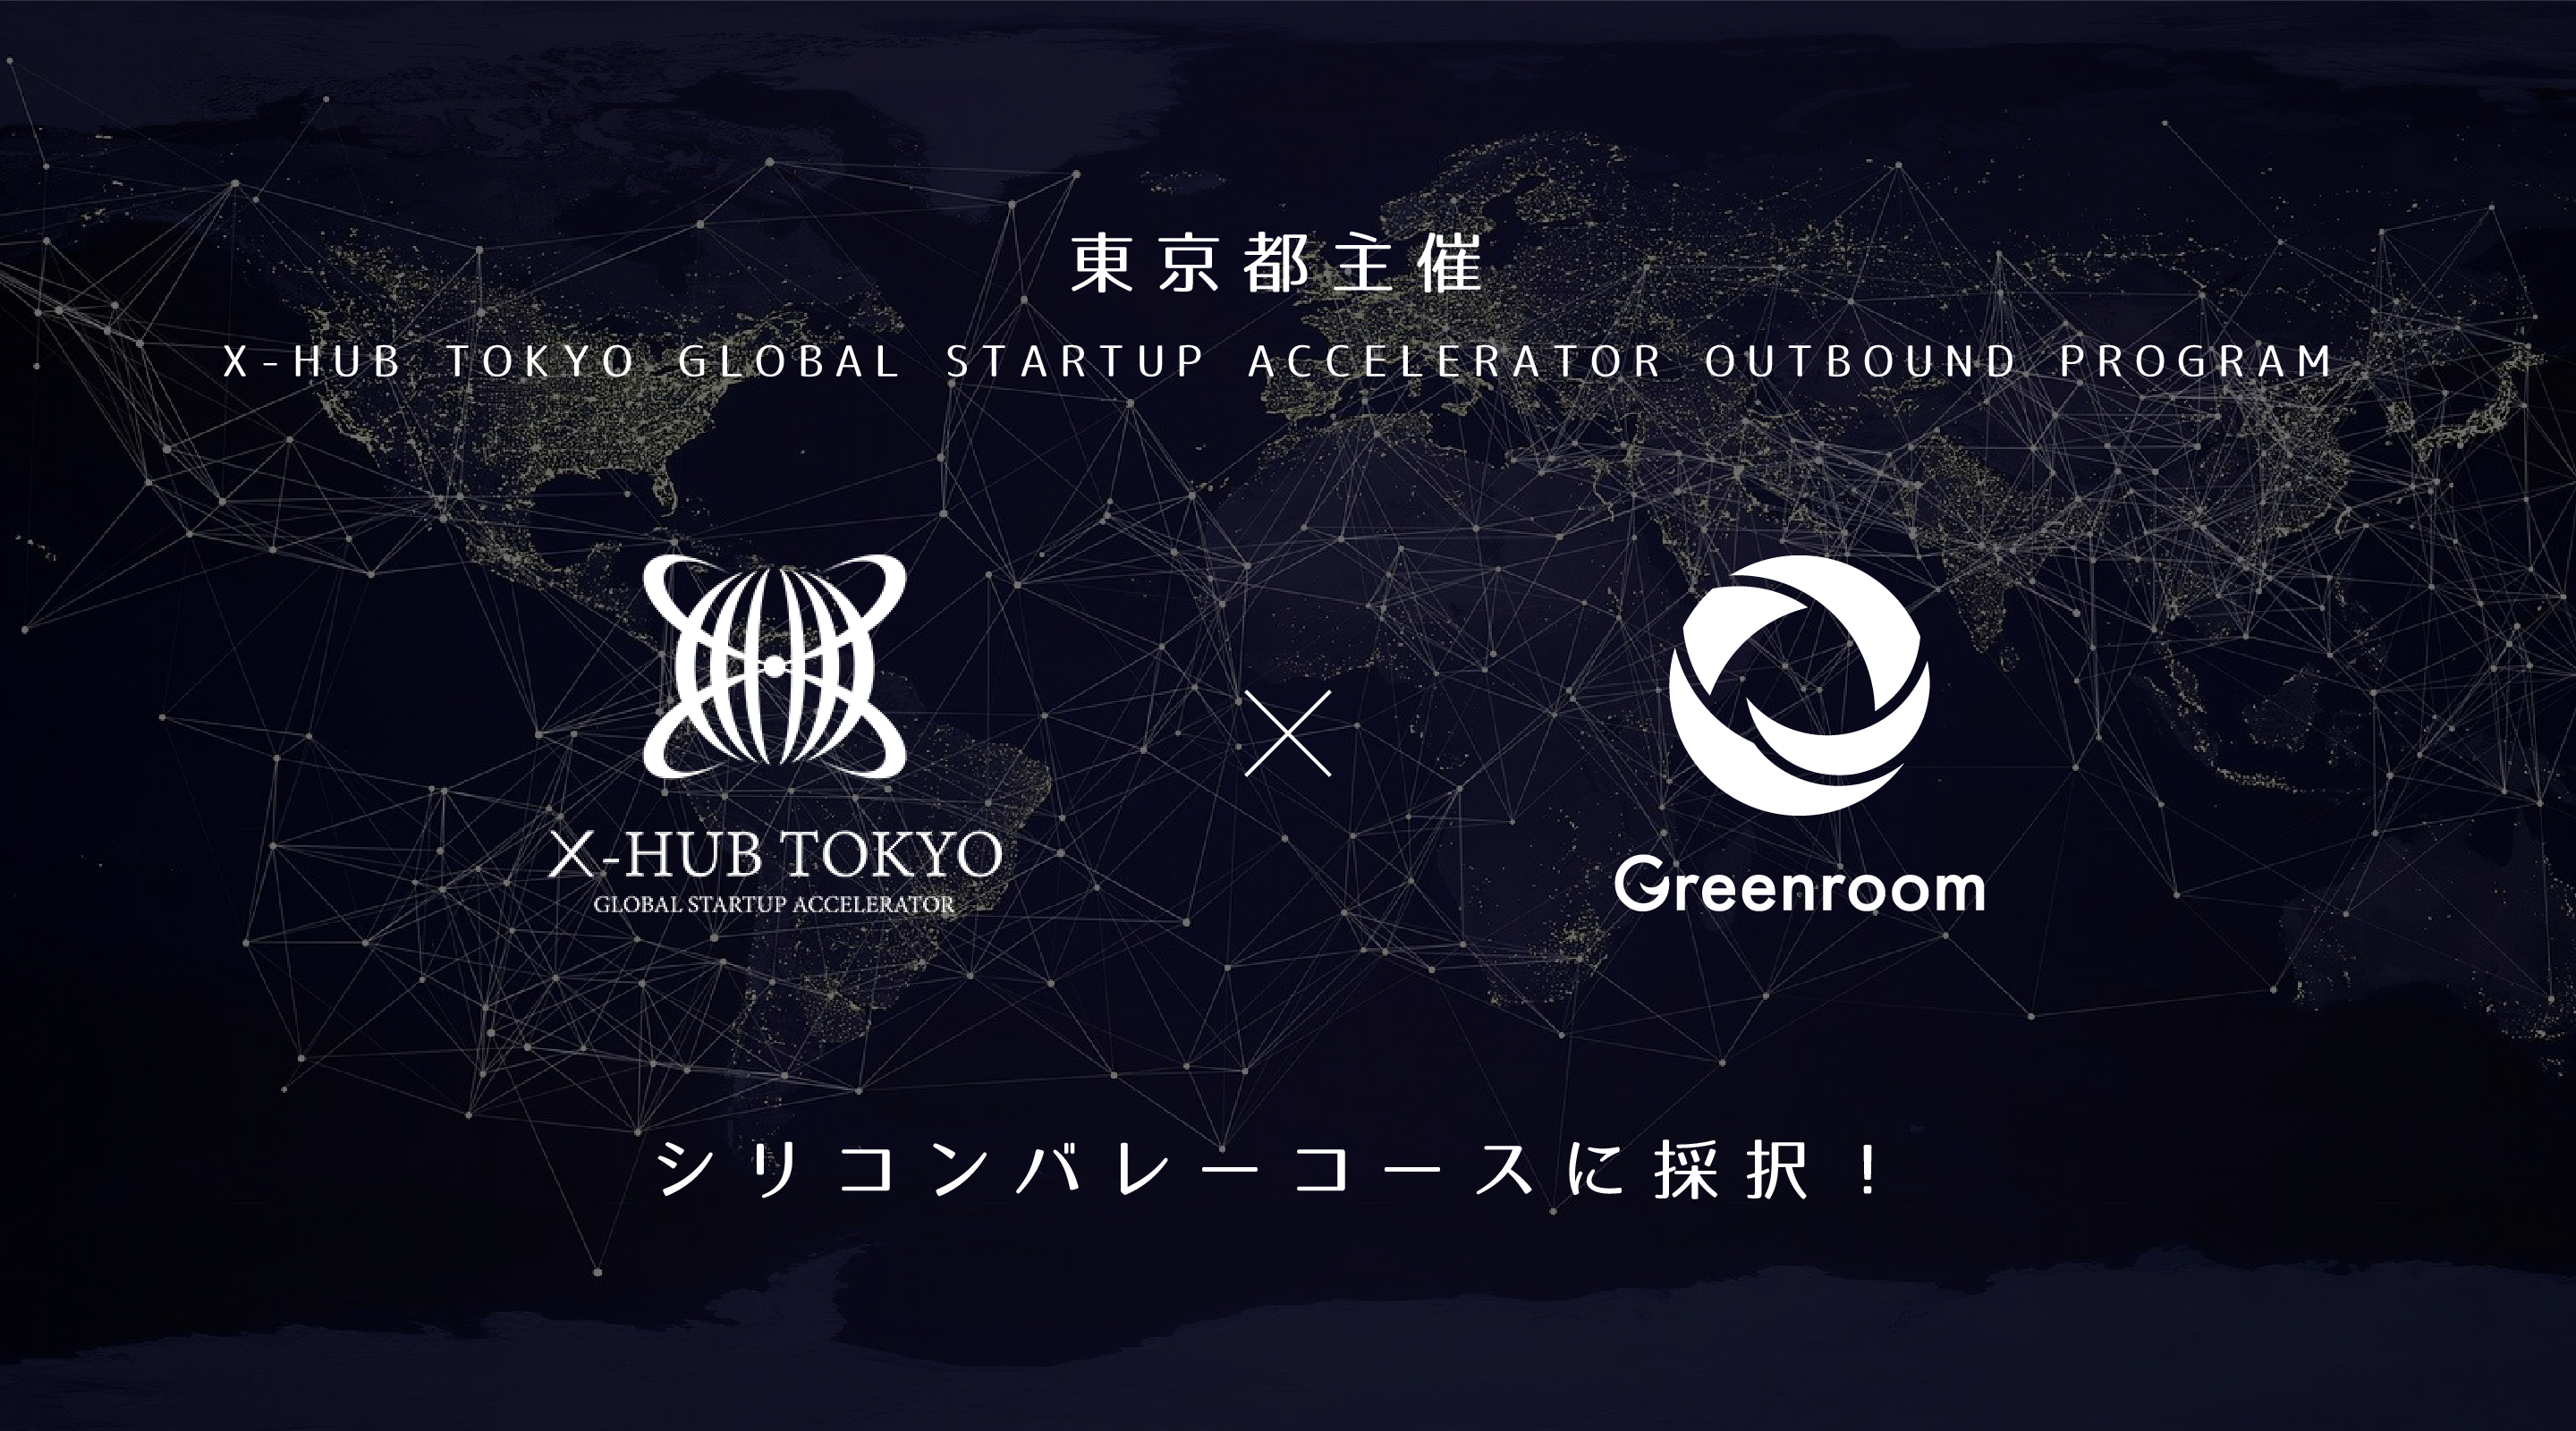 東京都主催
X-HUB TOKYO GLOBAL STARTUP ACCELERATOR OUTBOUND PROGRAM